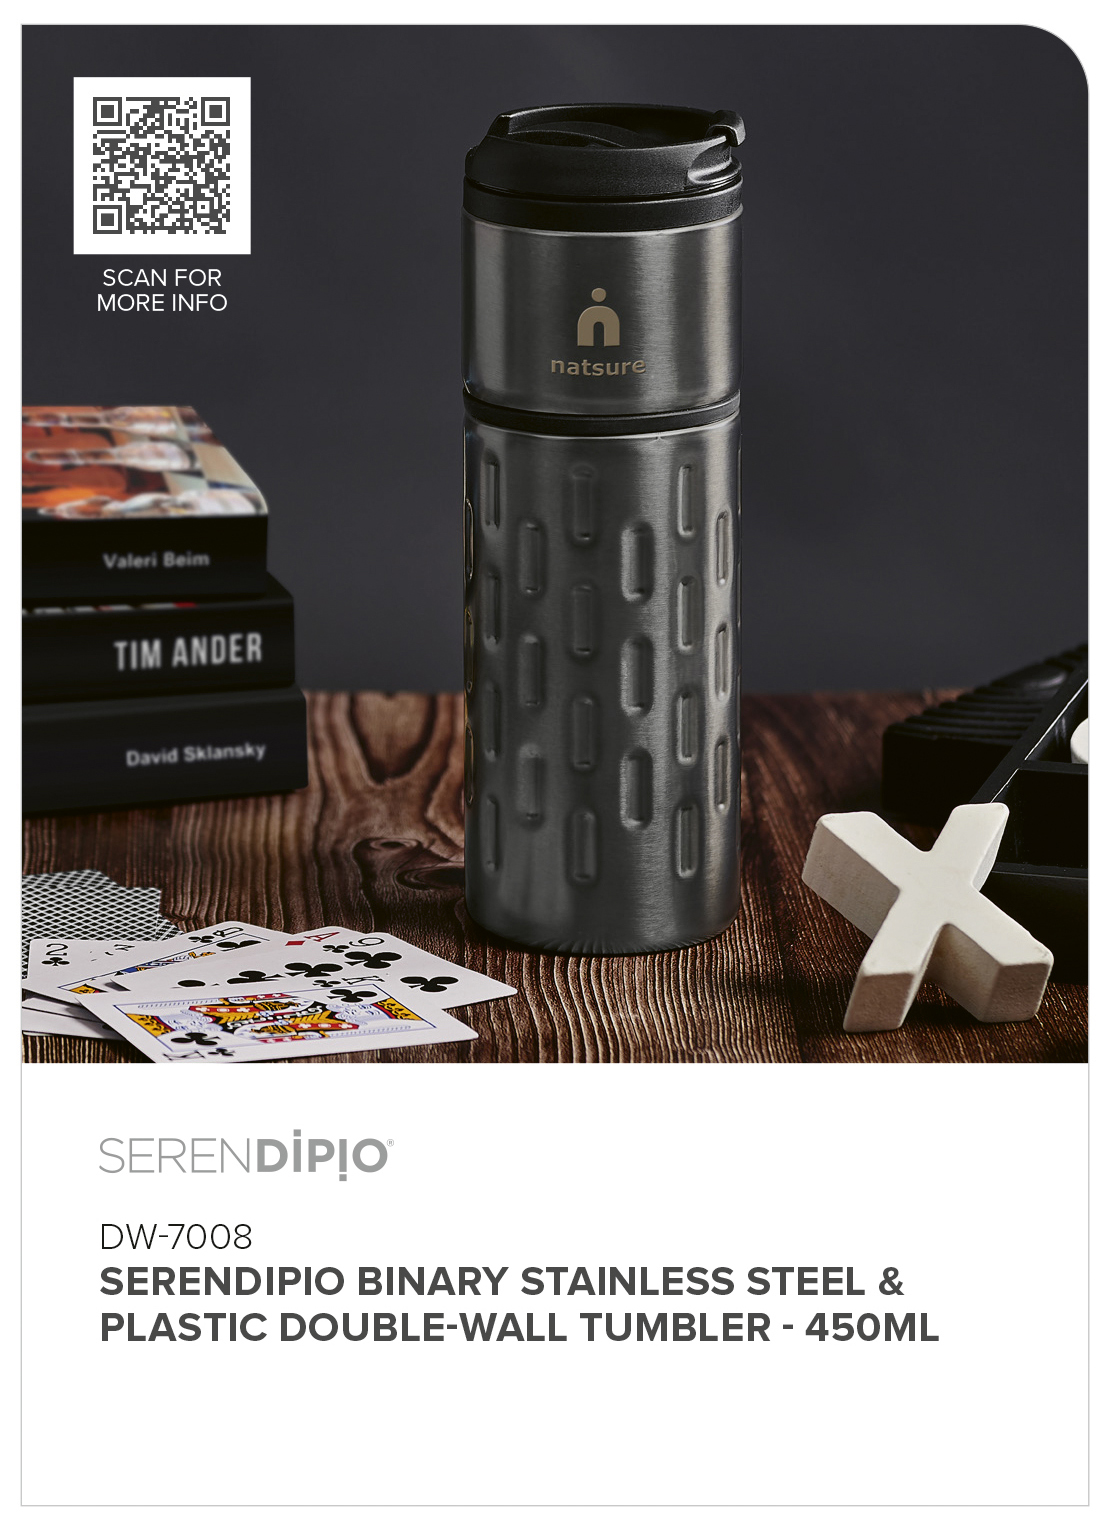 Serendipio Binary Stainless Steel & Plastic Double-Wall Tumbler - 450ml